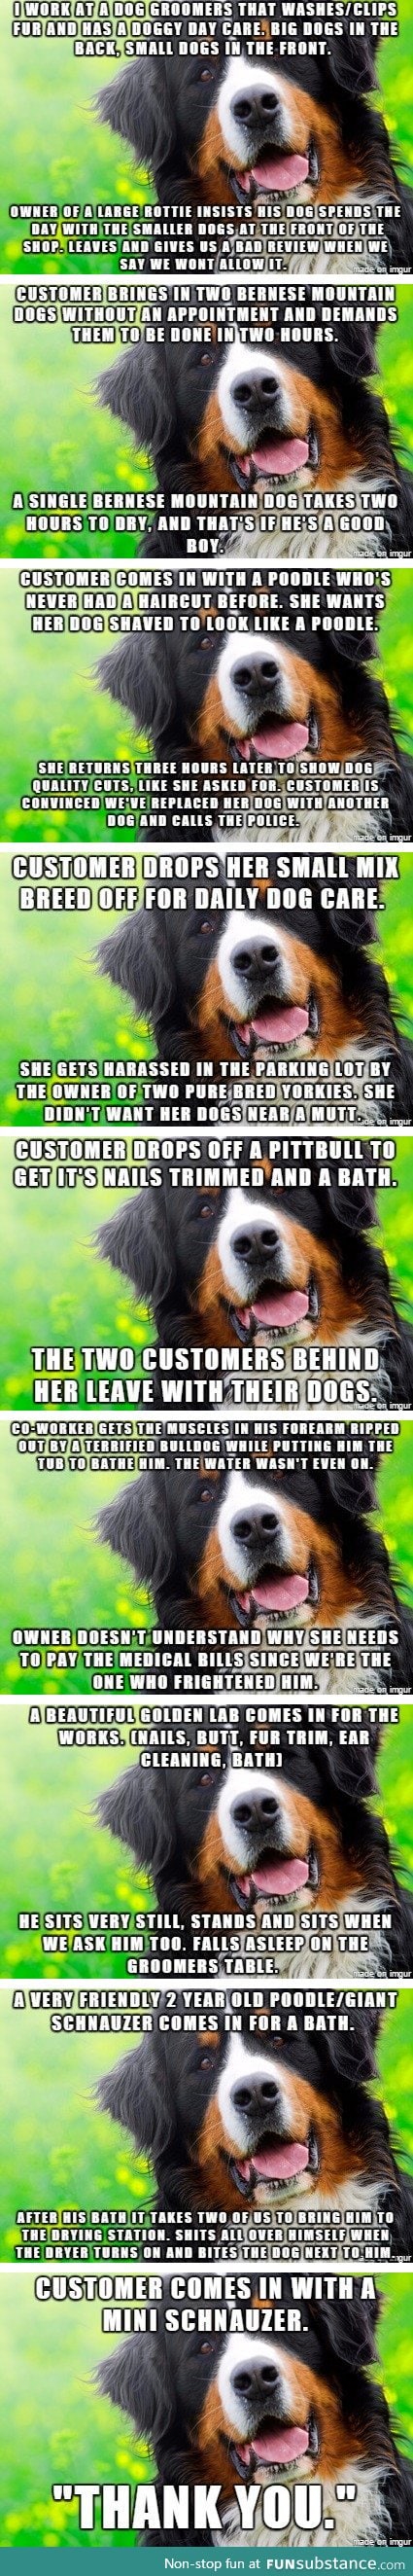 Dog groomer stories